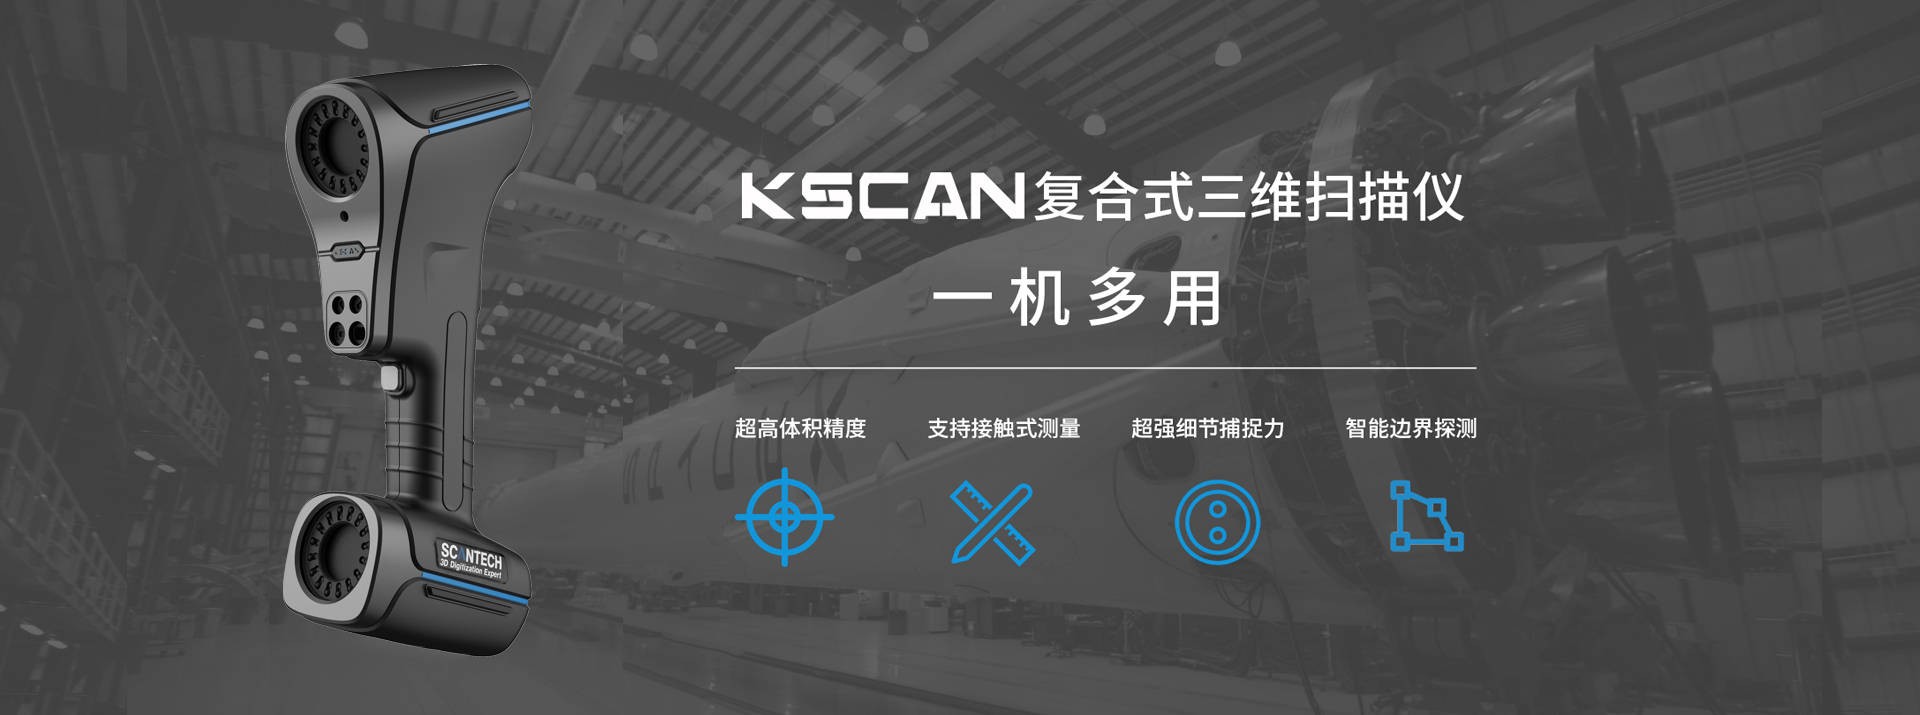 KSCAN-MAGIC复合式3D扫描仪